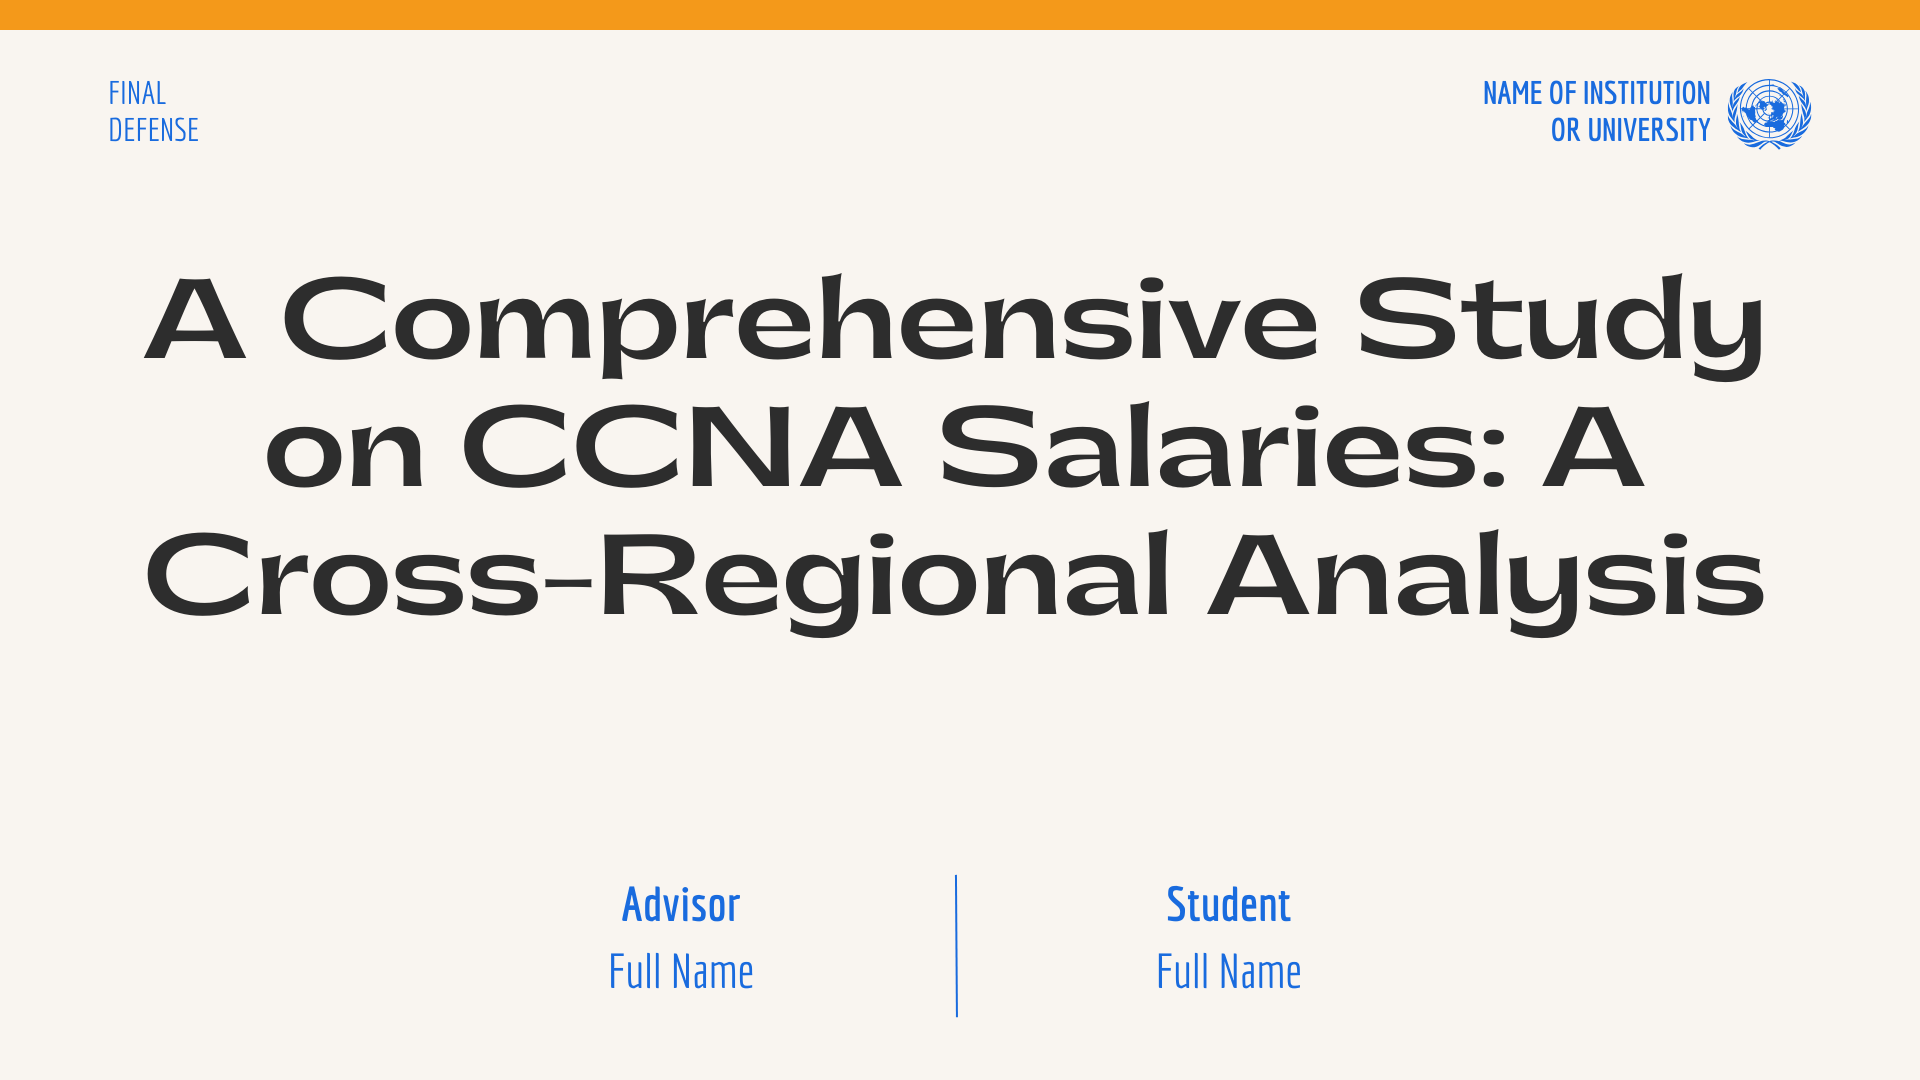 A Comprehensive Study on CCNA Salaries: A Cross-Regional Analysis